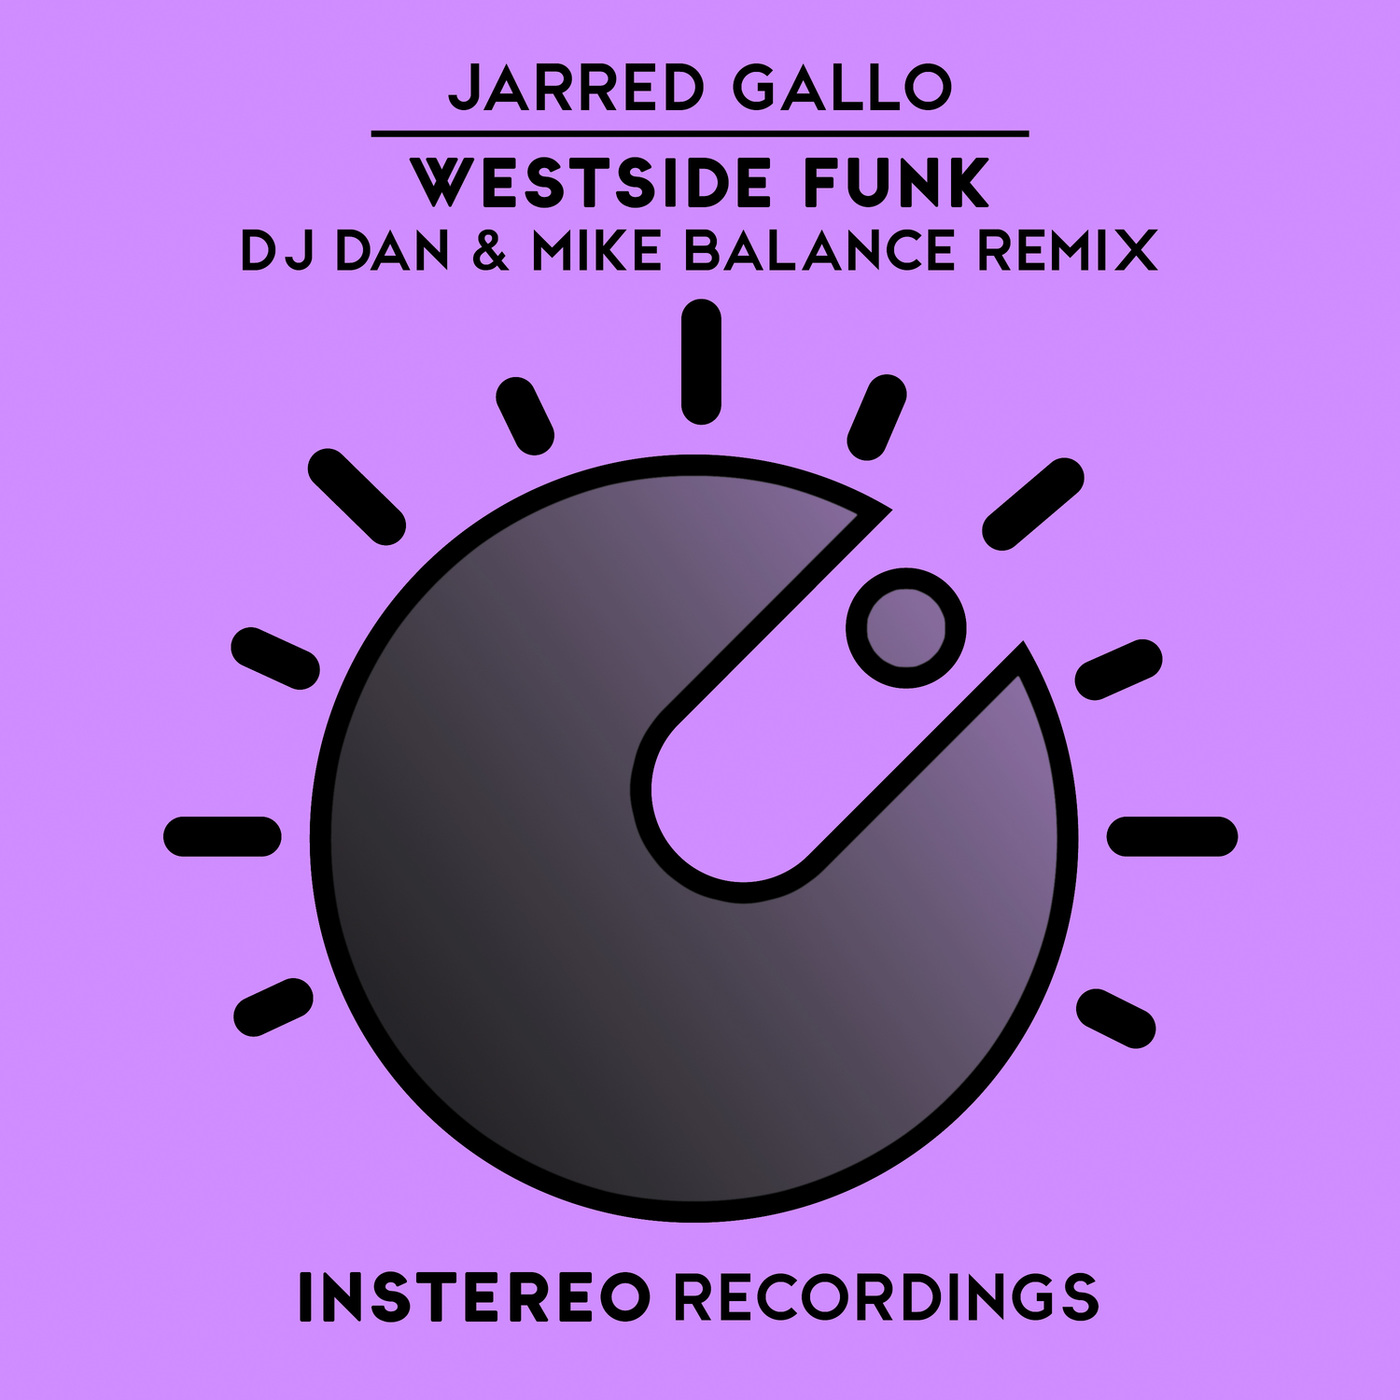 Jarred Gallo - Westside Funk (DJ Dan & Mike Balance Remix) / InStereo Recordings